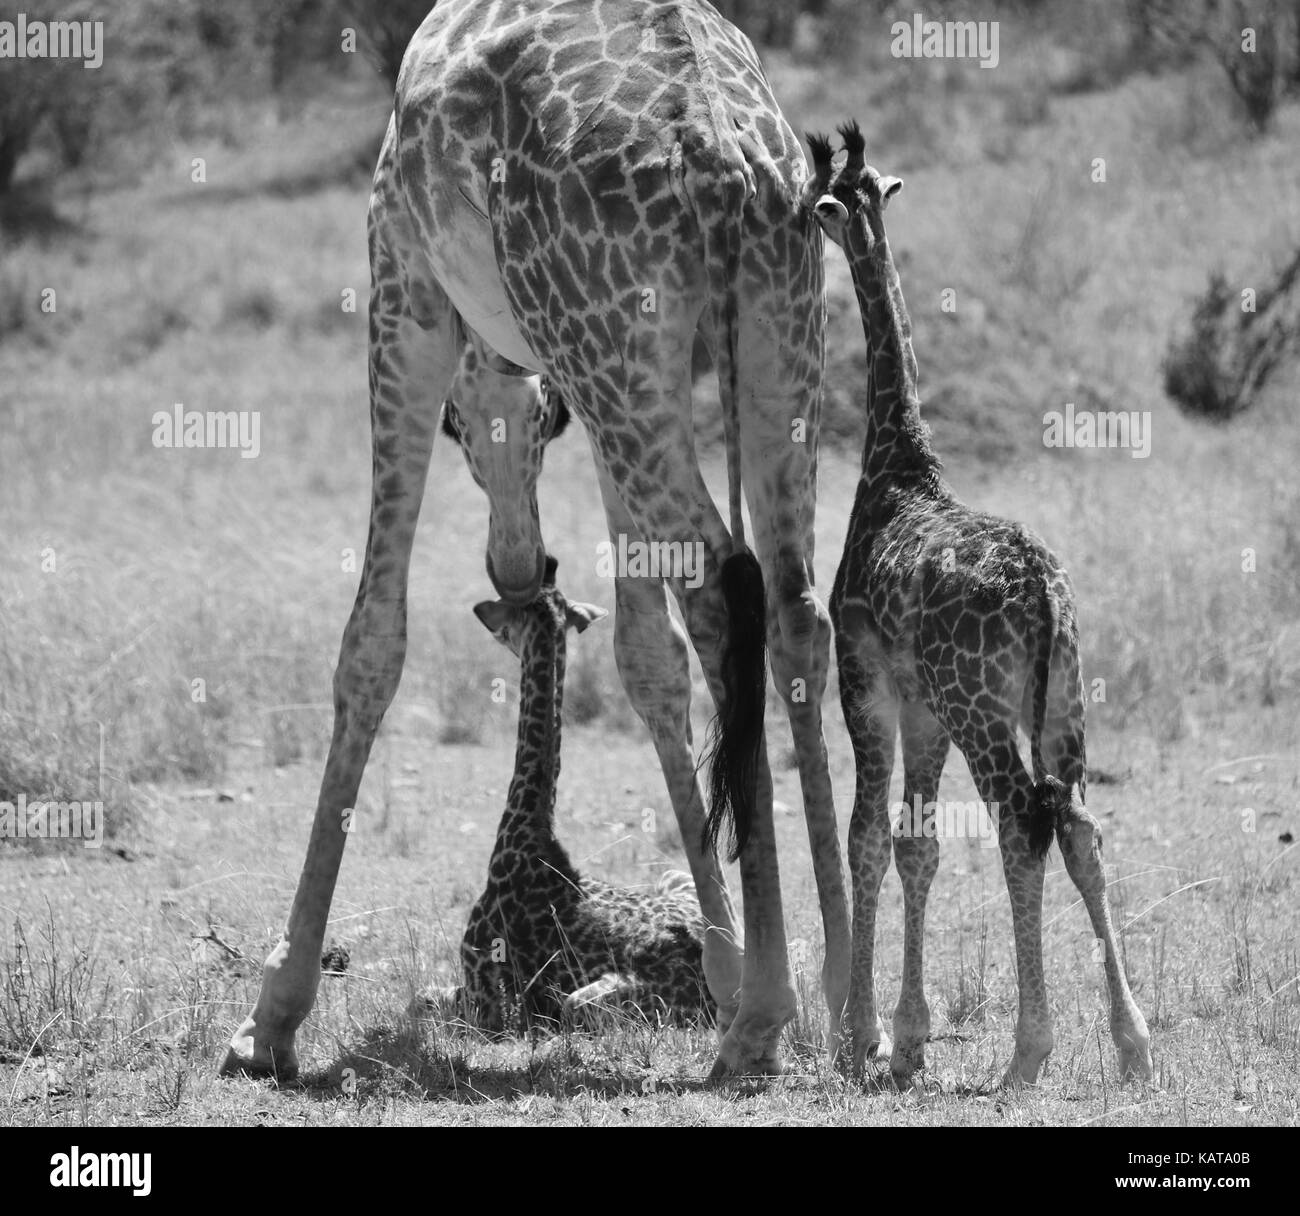 Madre y joven masai jirafas - reserva de Masai Mara - Kenia Foto de stock